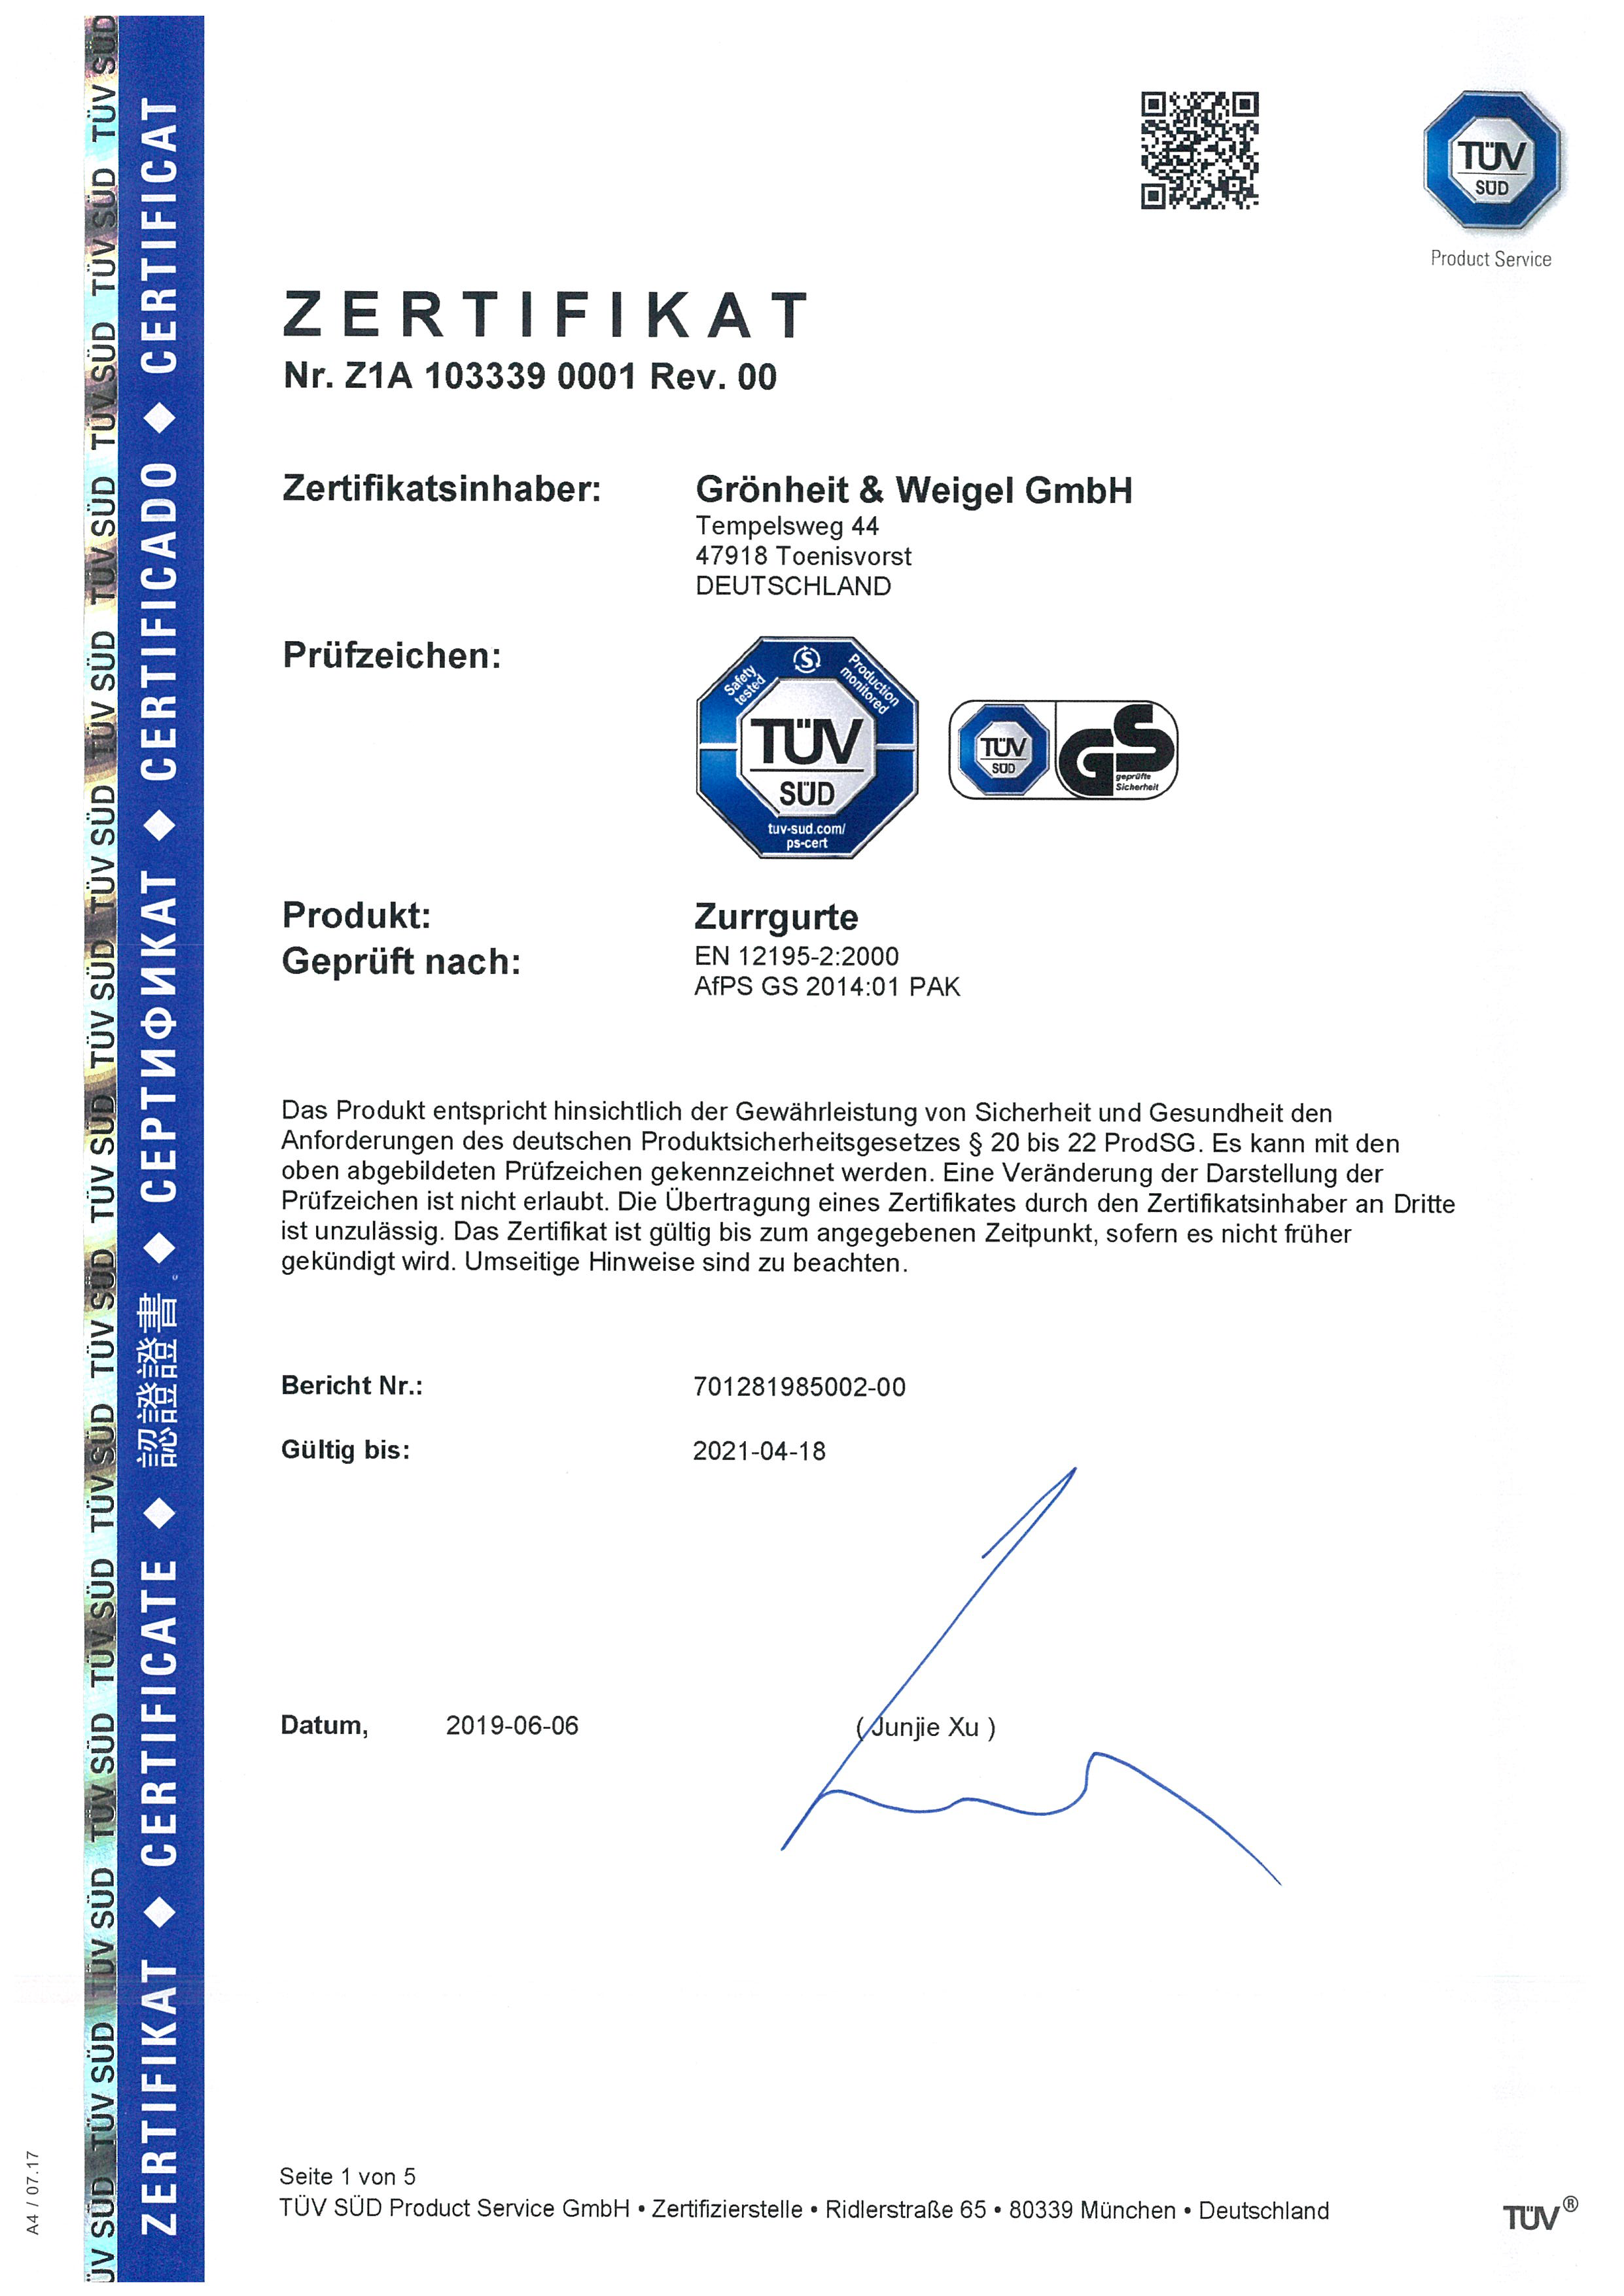 TÜV Zertifikat Zurrgurte